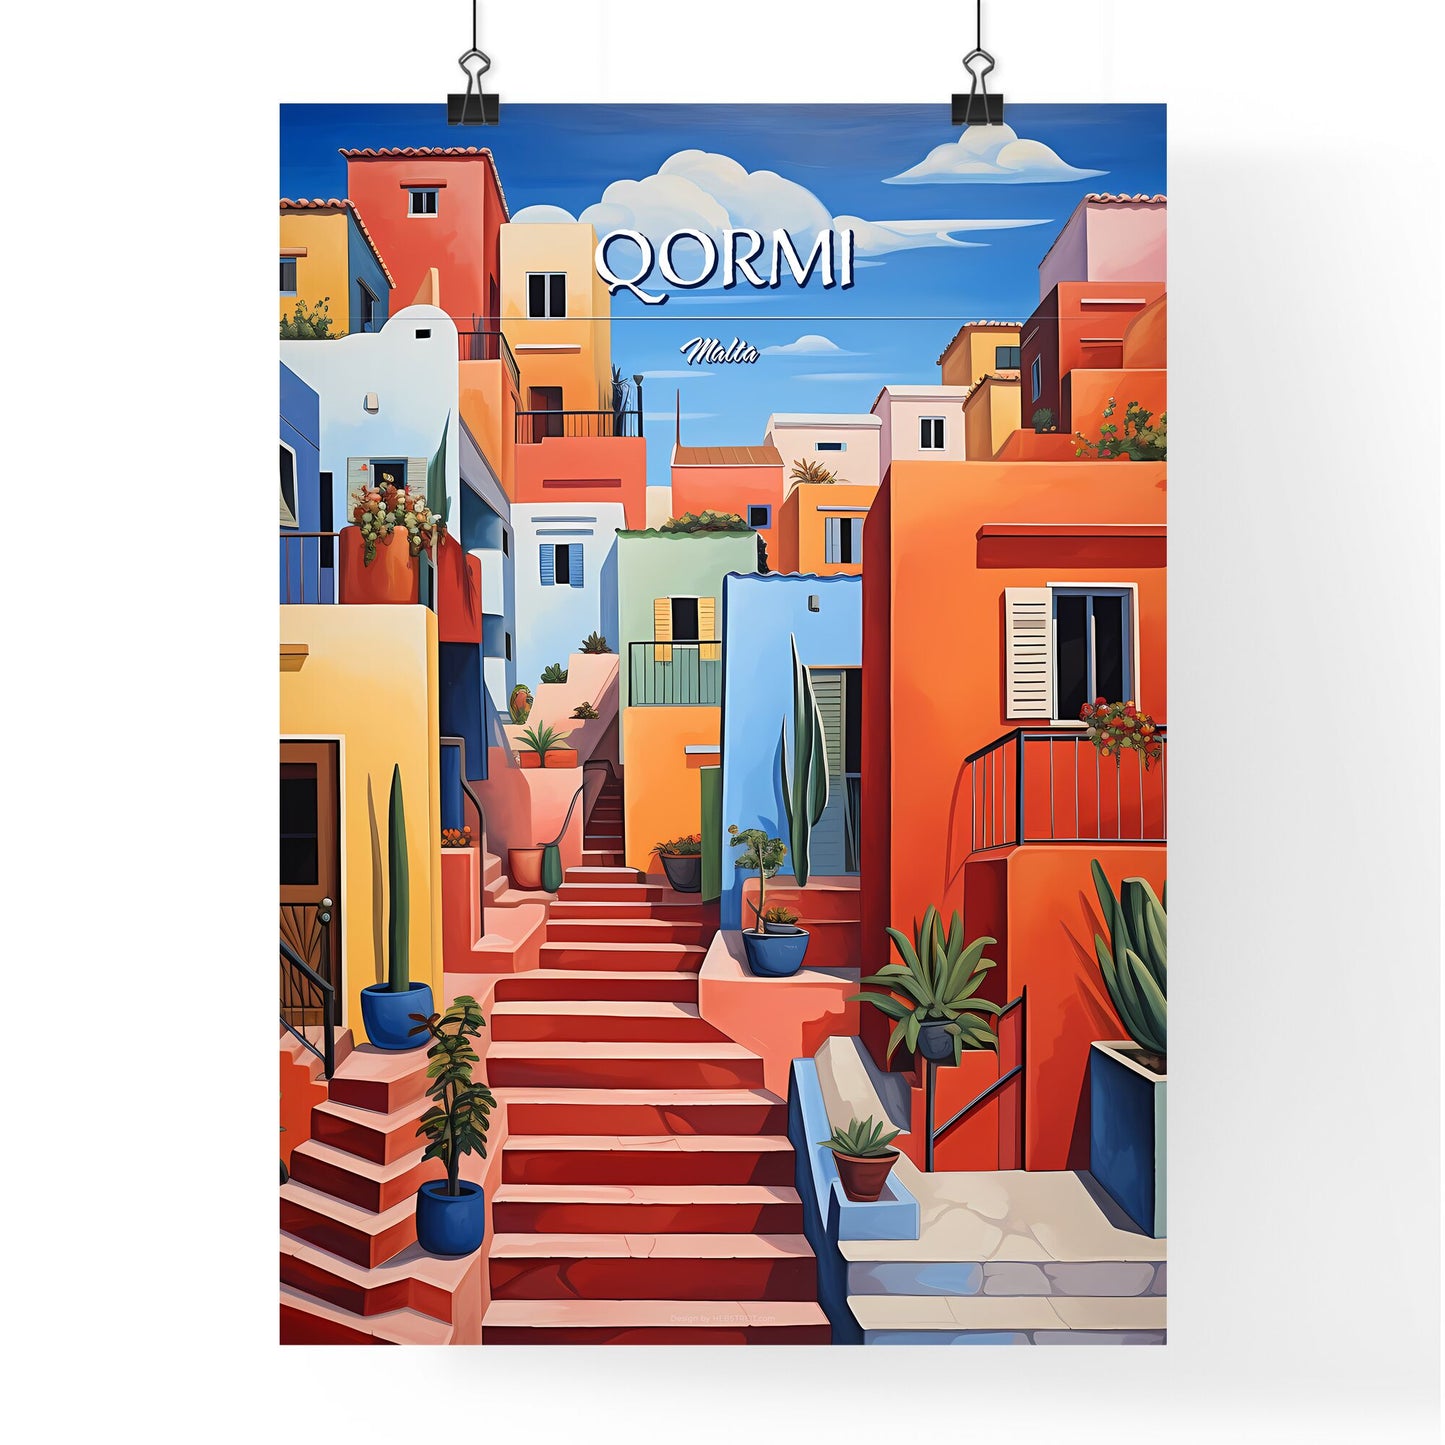 Qormi, Malta - Art print of a painting of a colorful city Default Title